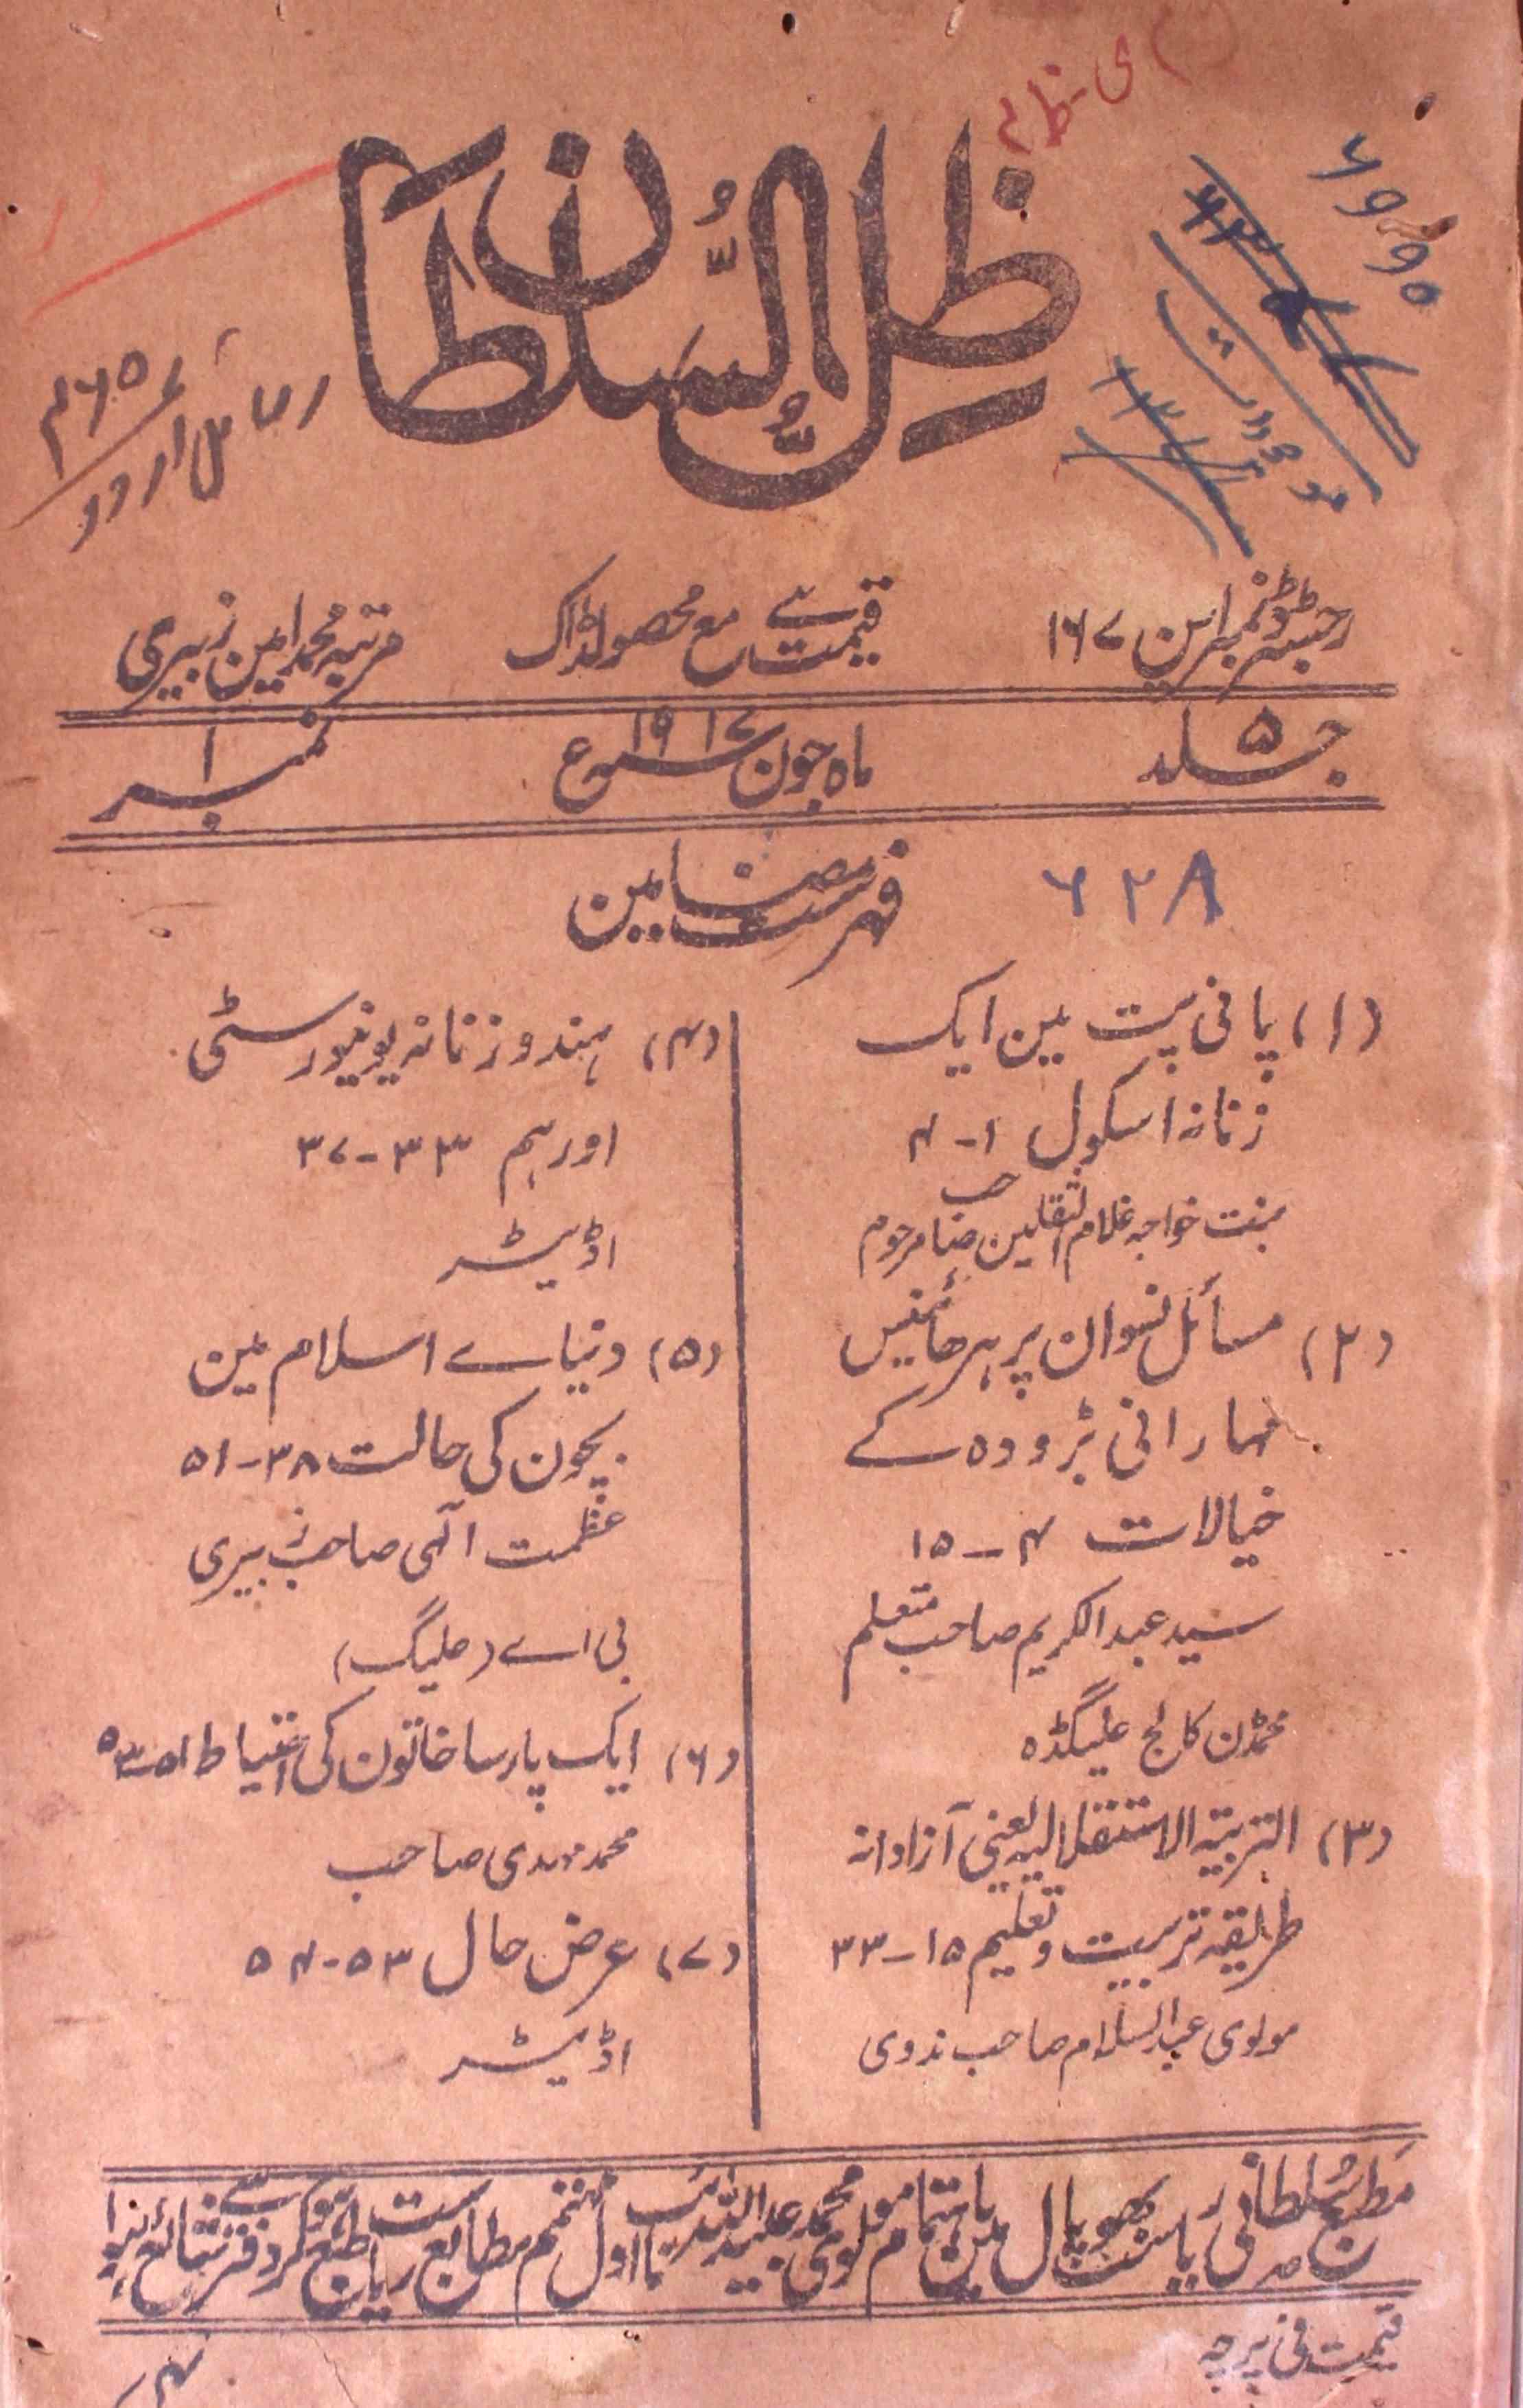 ظل السلطان- Magazine by شمسی مشین پریس، آگرہ, مطبع سلطانی, مطبع سلطانی، بھوپال 